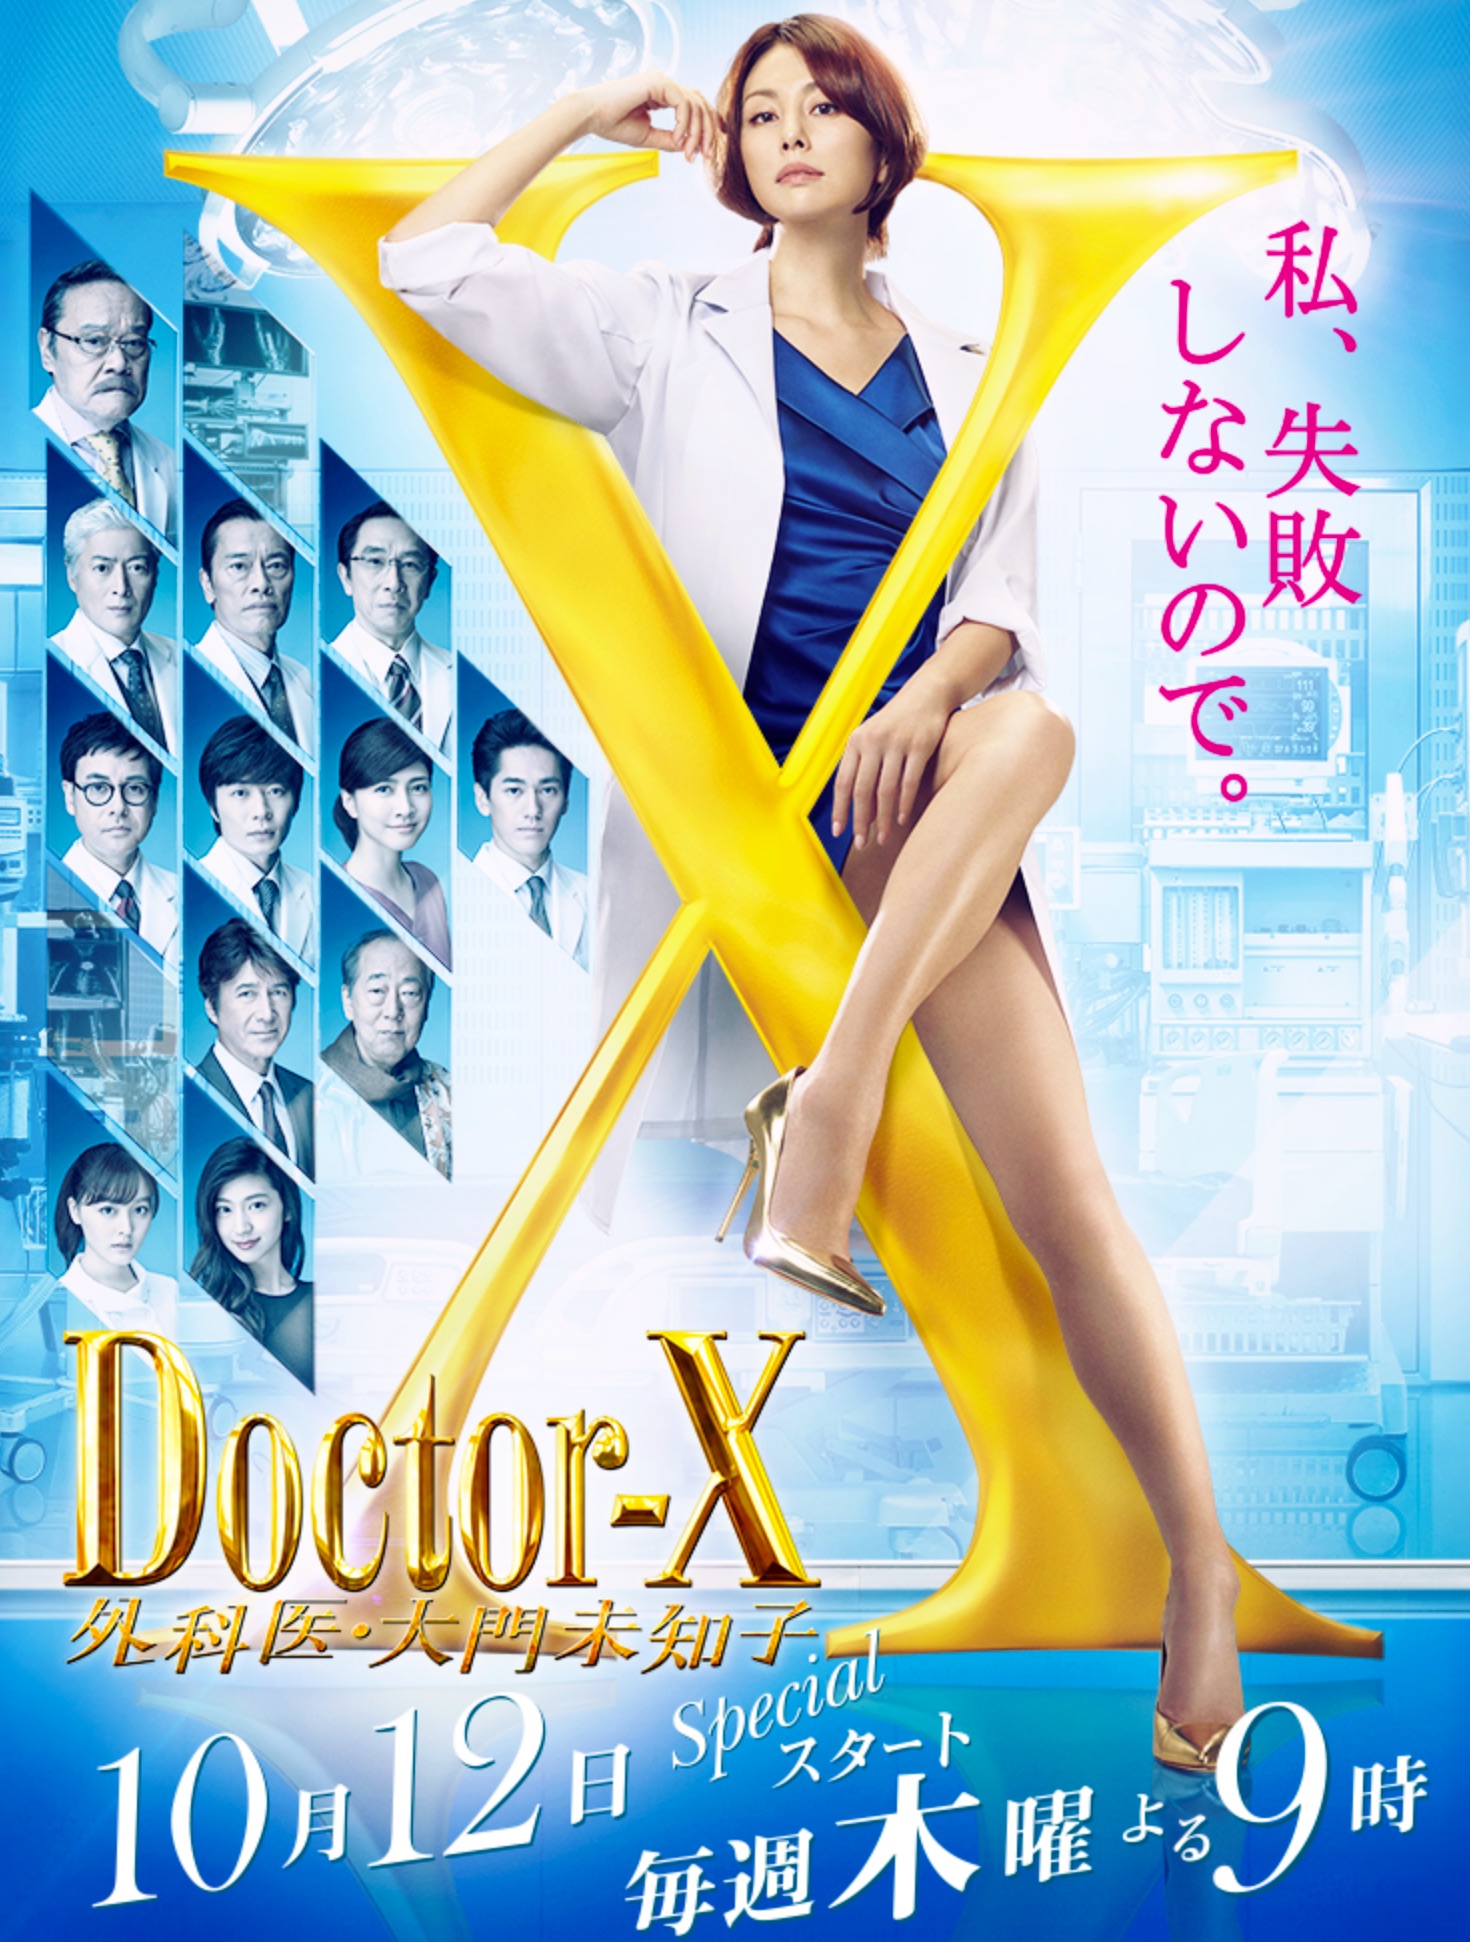 Doctor-X S5